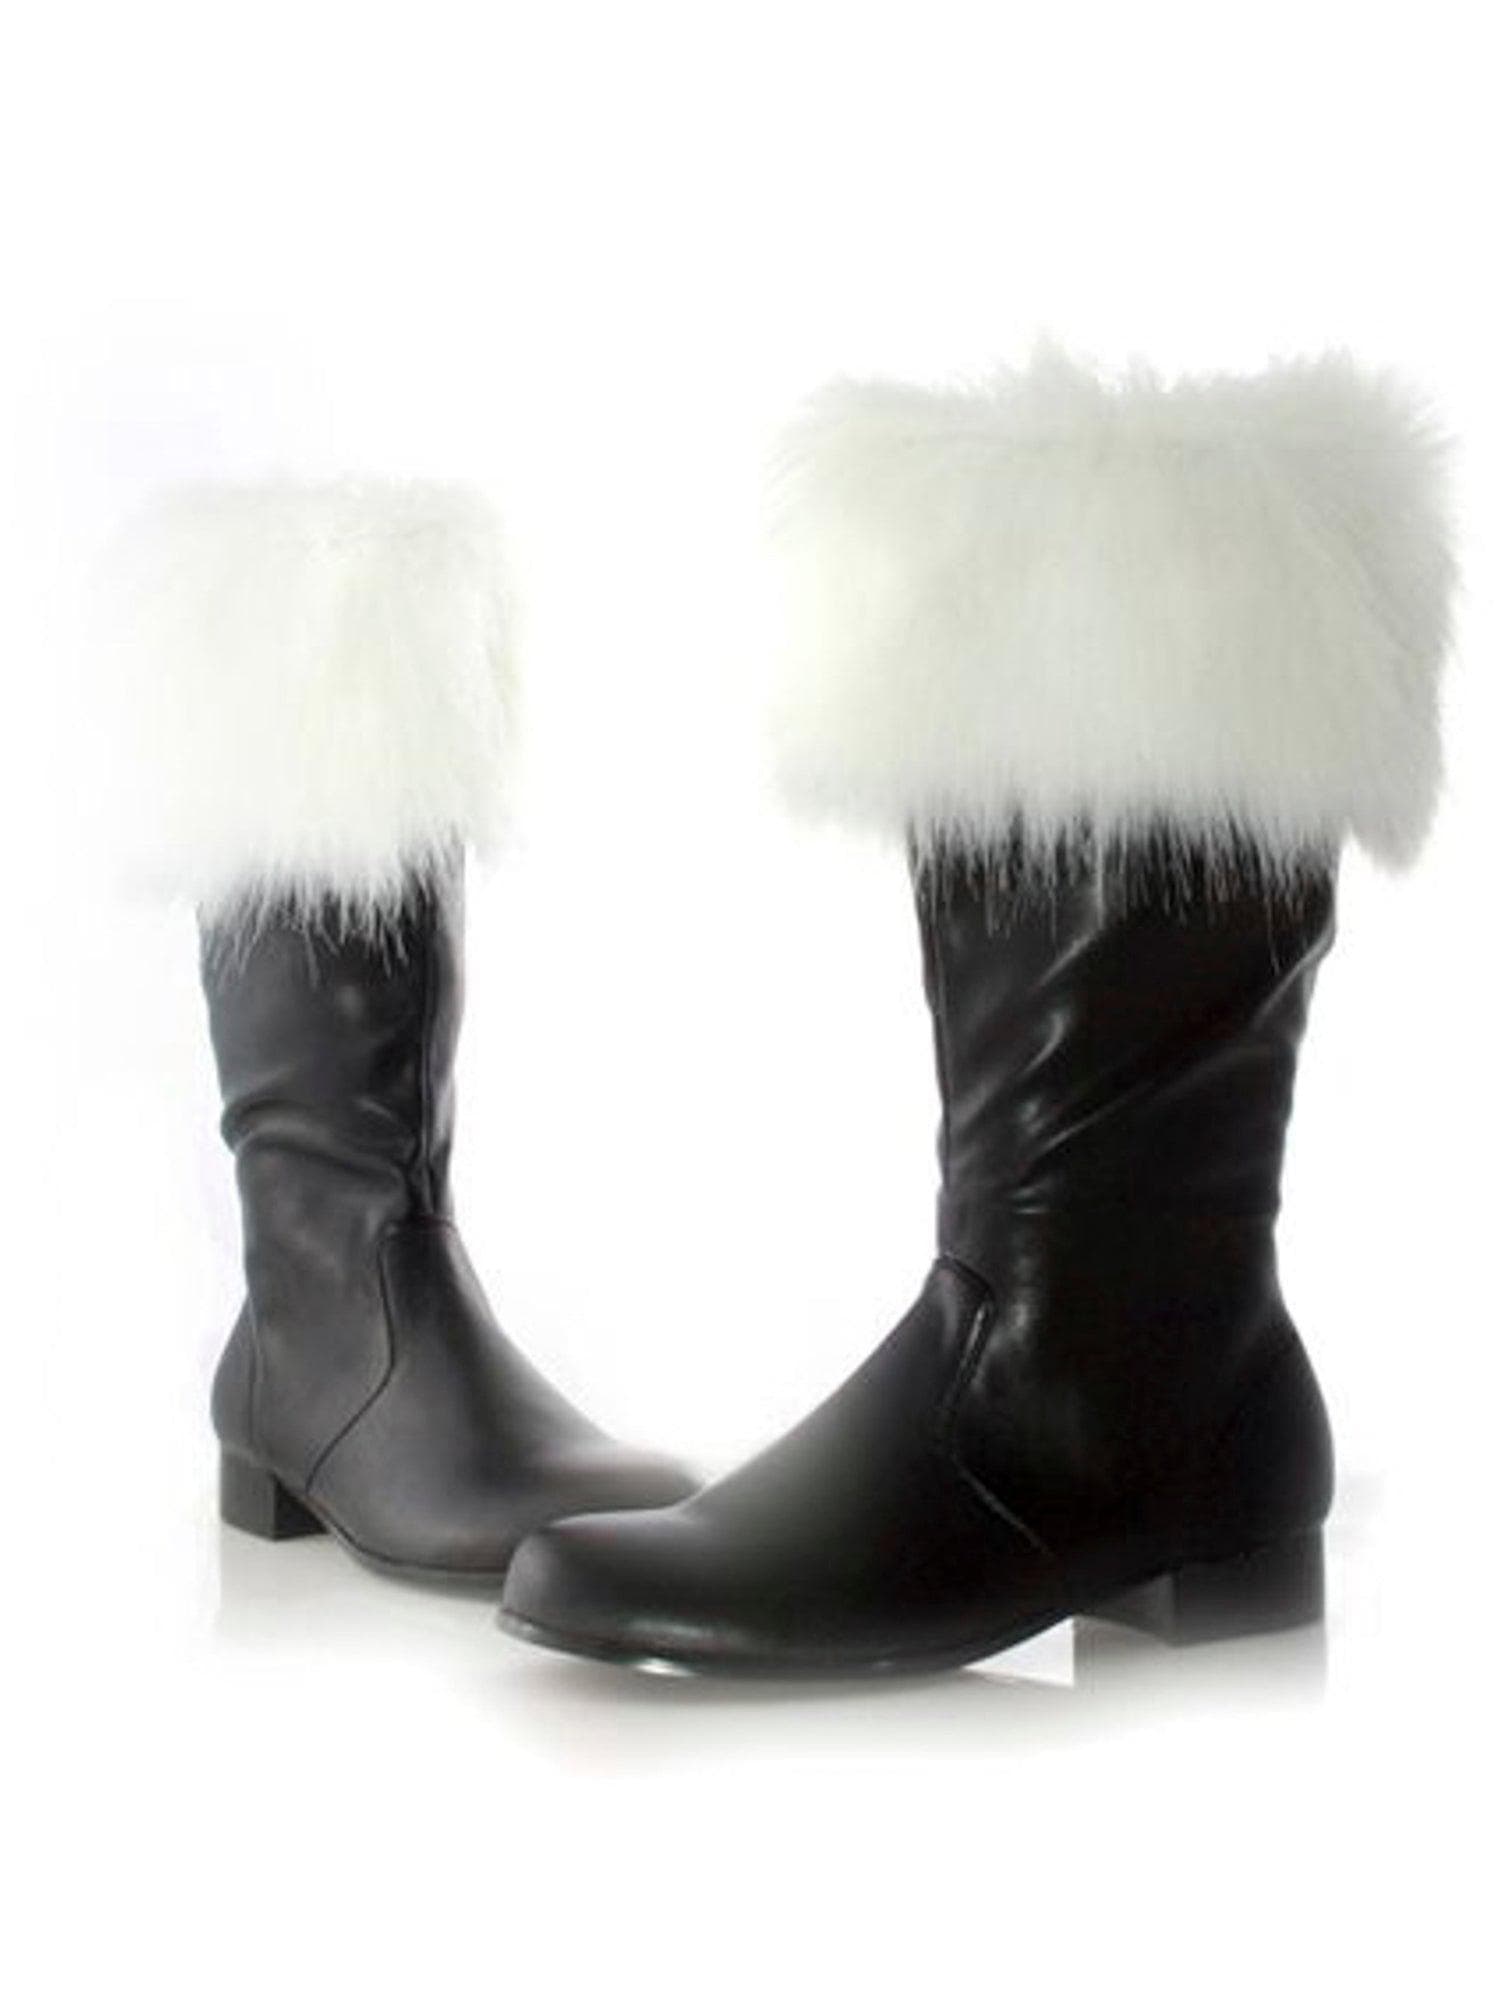 Adult Santa Boots with Faux Fur - costumes.com